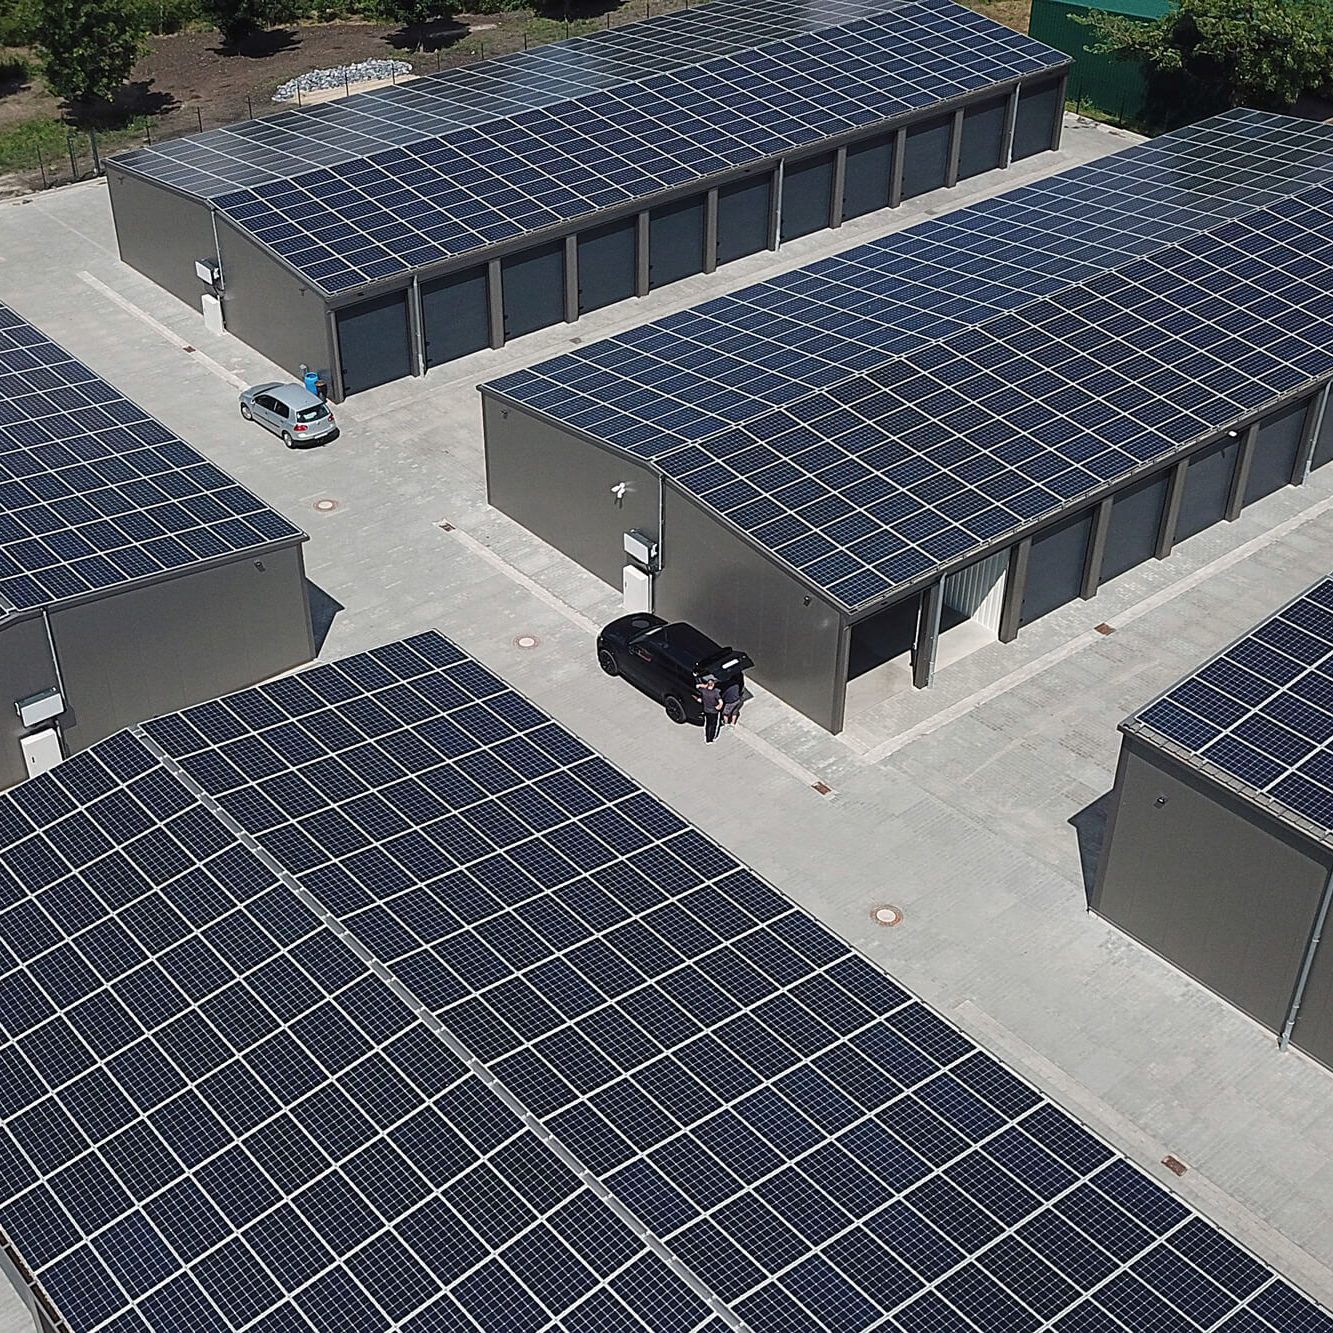 7yrds-photovoltaic-xxl-garagenpark-moers-01